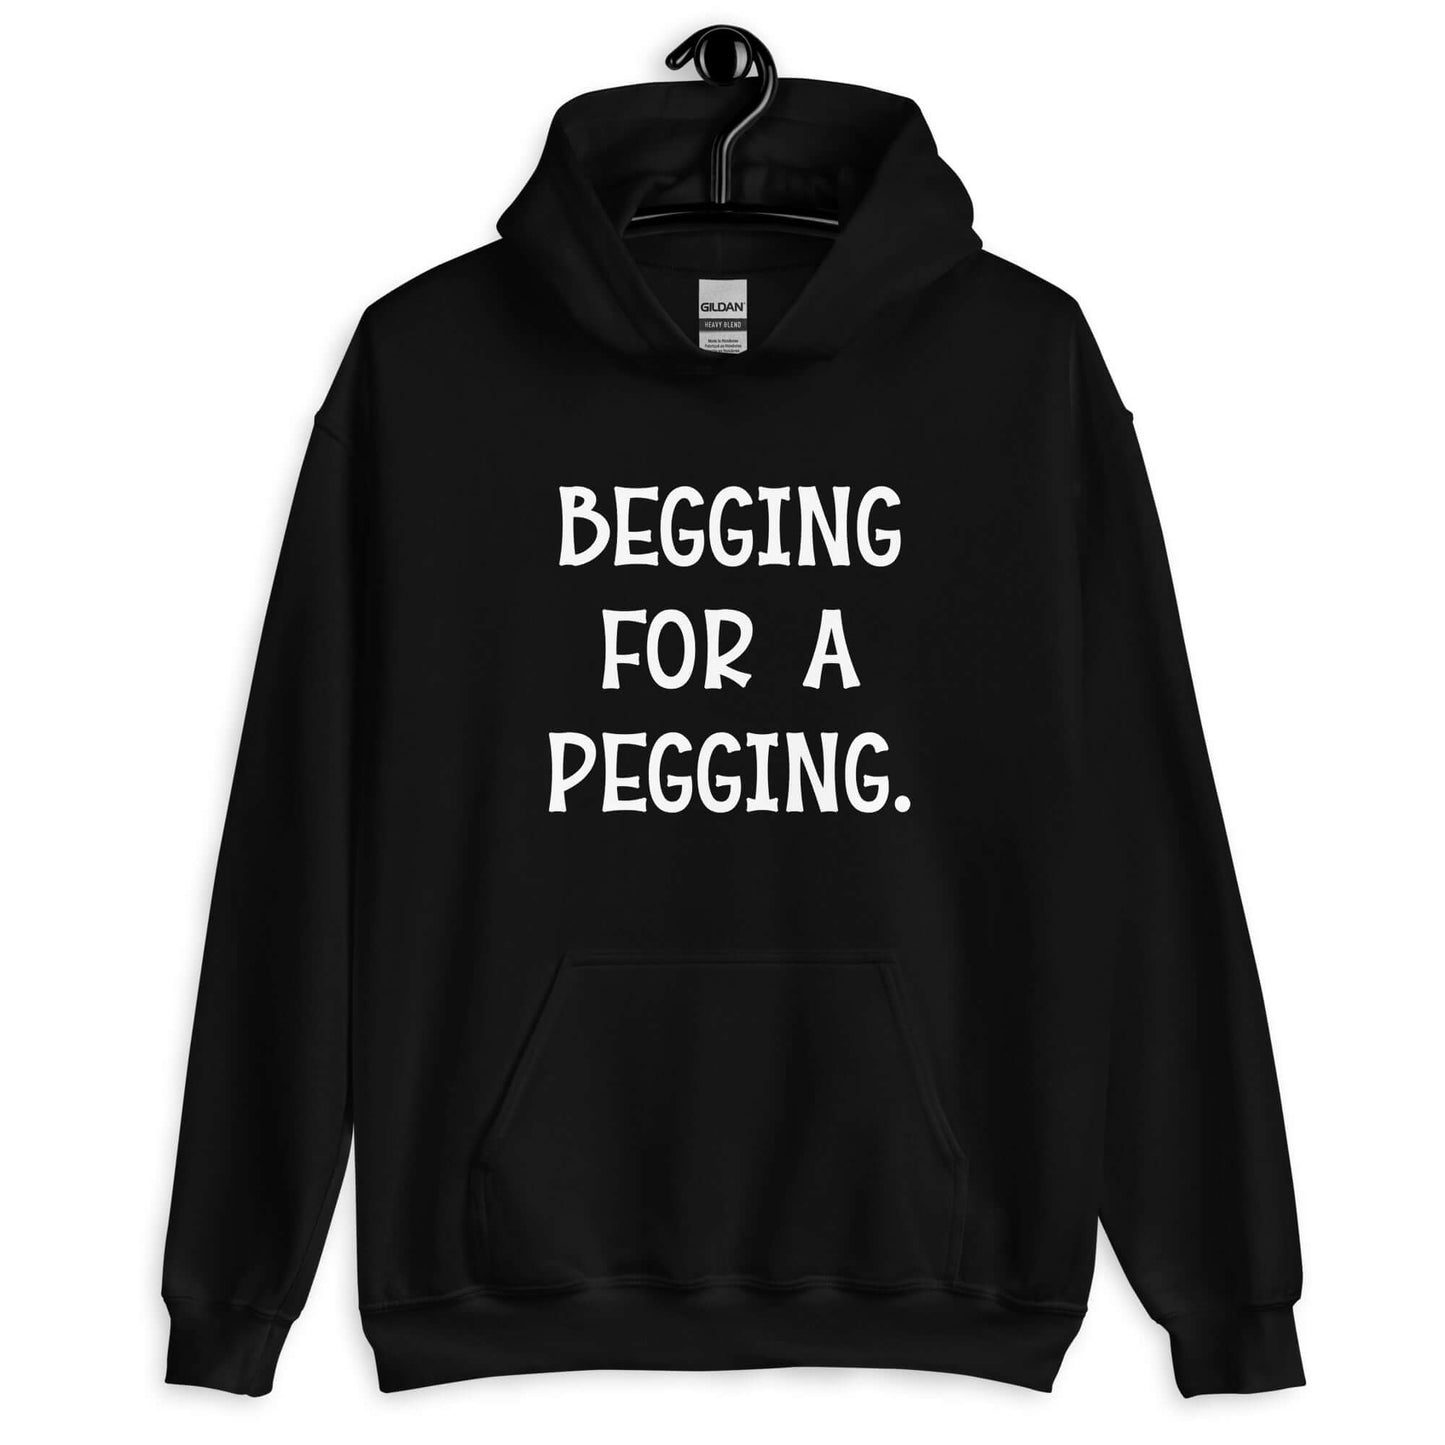 Begging for a pegging hoodie sweatshirt